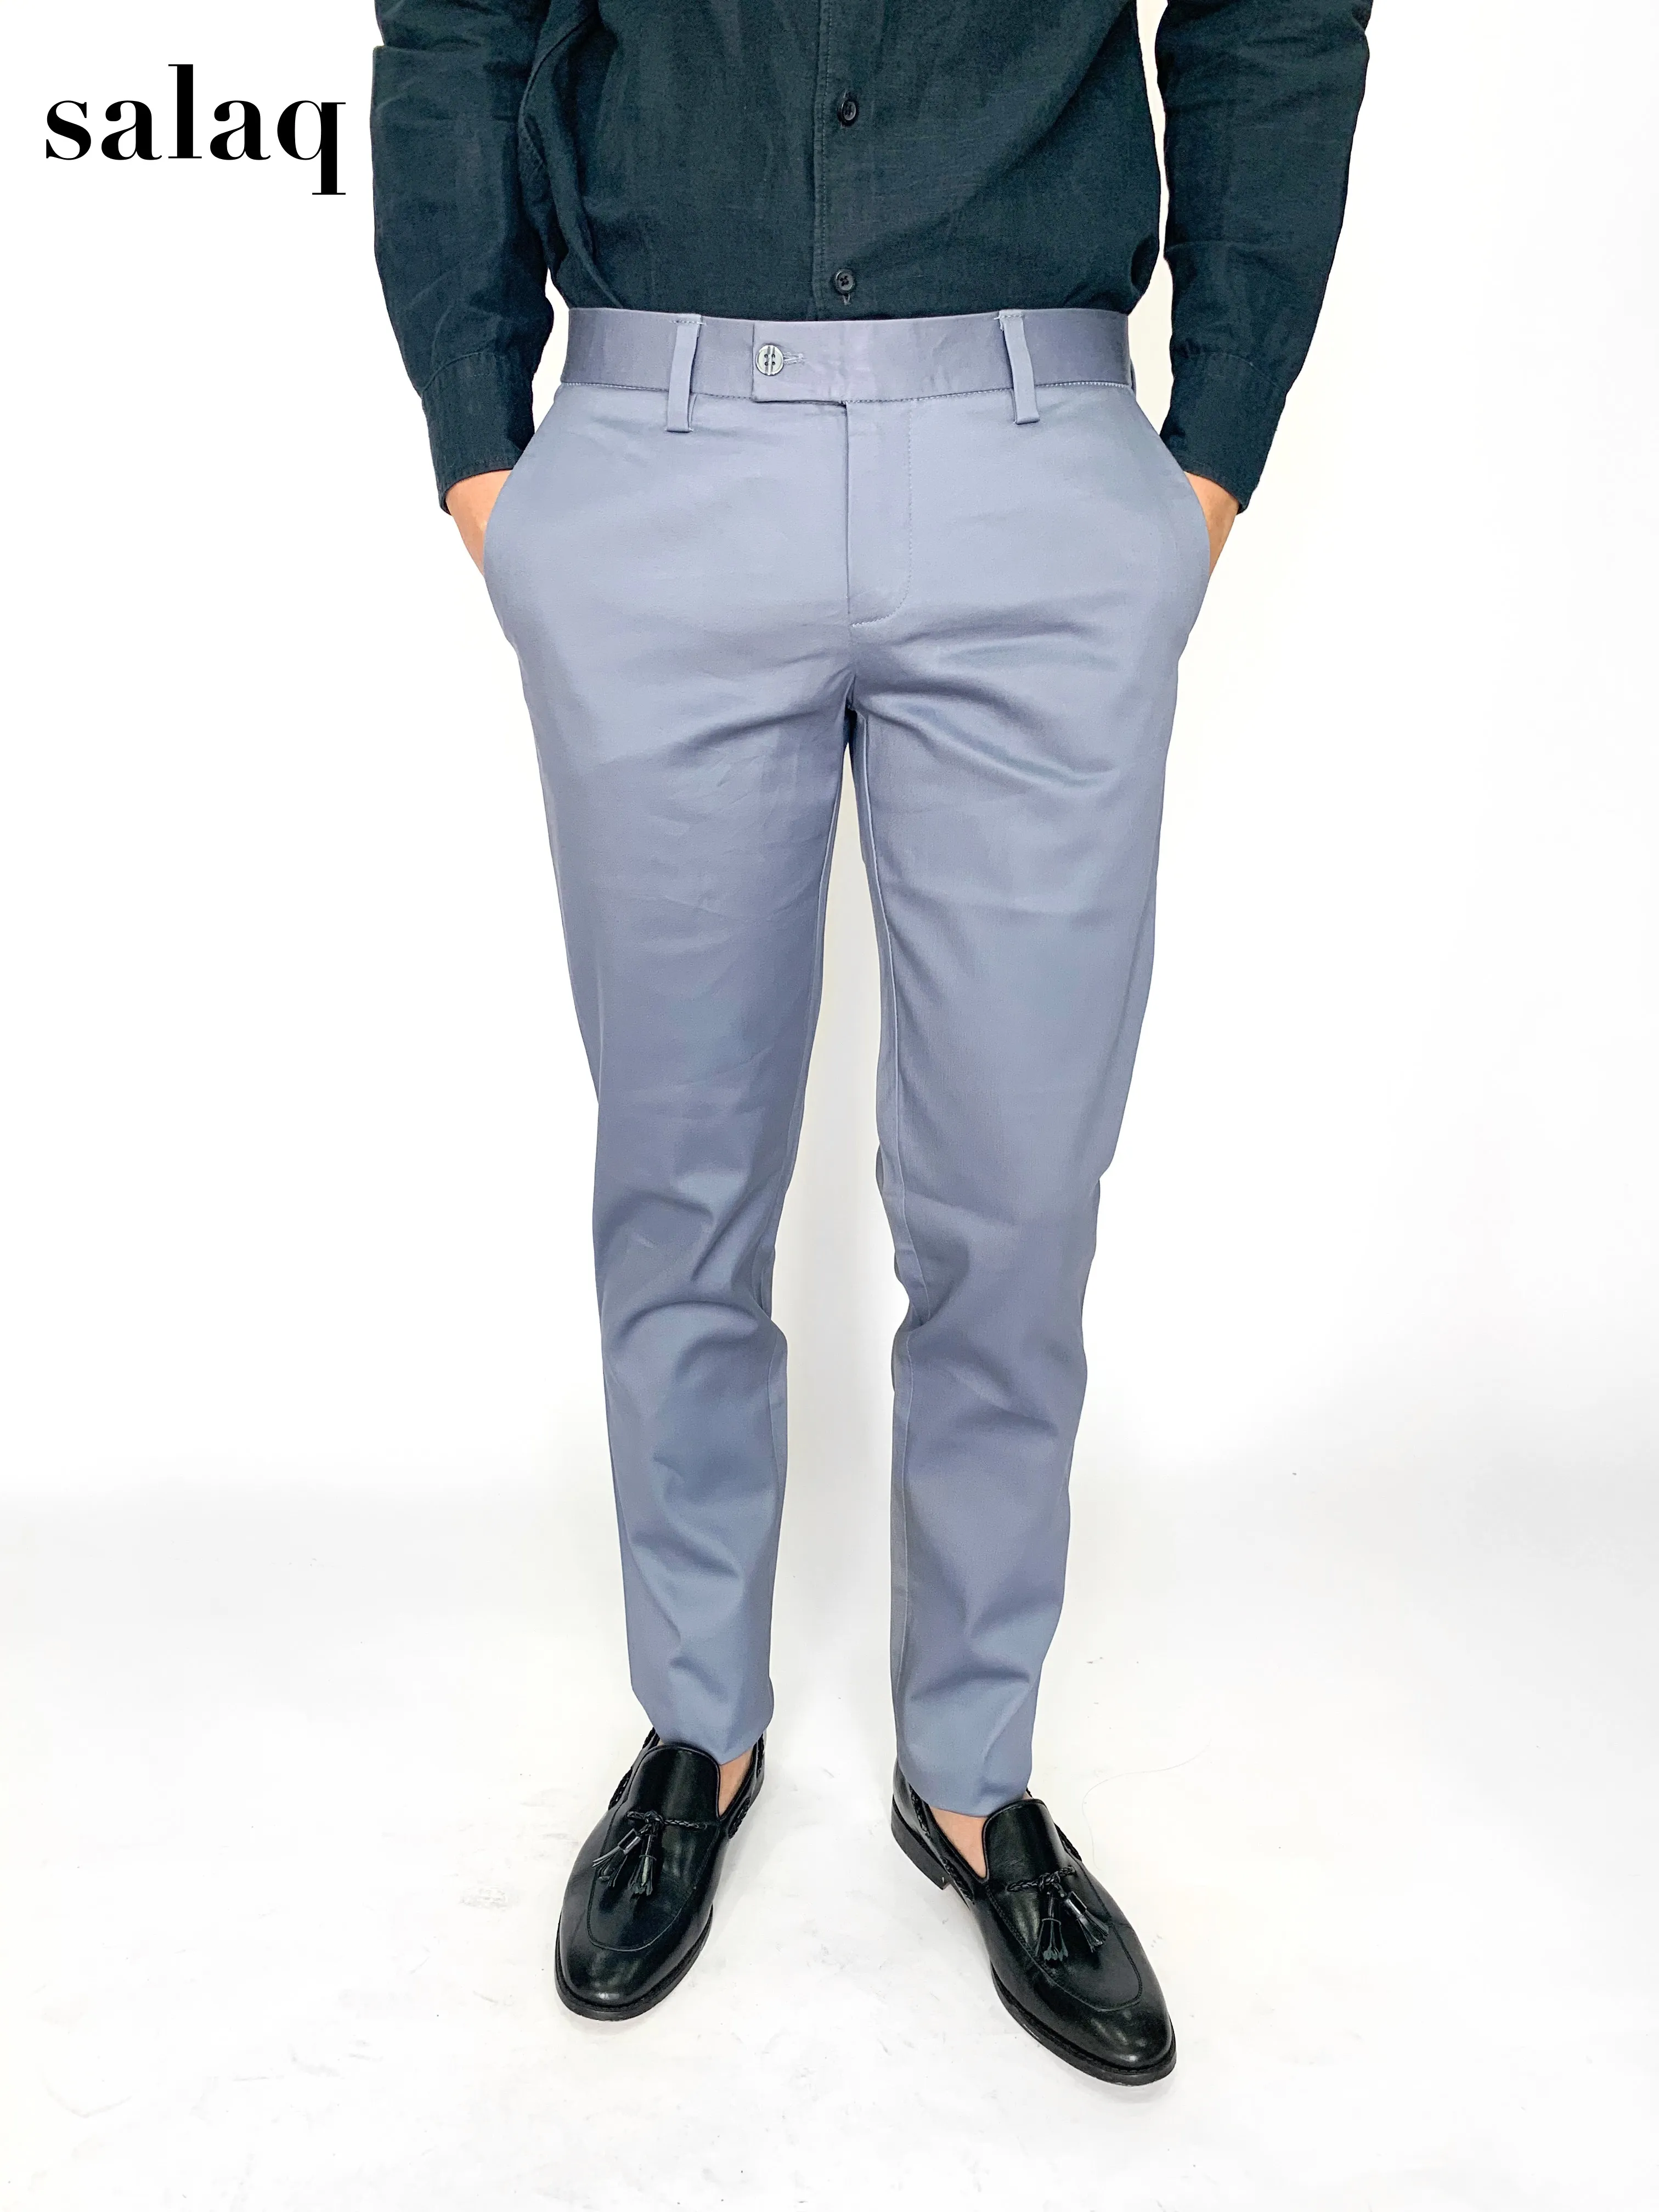 salaq [แจกโค้ดส่วนลด] กางเกงสแลคกระบอกเล็กเข้ารูป กางเกงขายาวผู้ชาย กางเกงผ้ายืดขายาว กางเกงทำงาน กางเกงสแล็ค สีเทาฟ้า